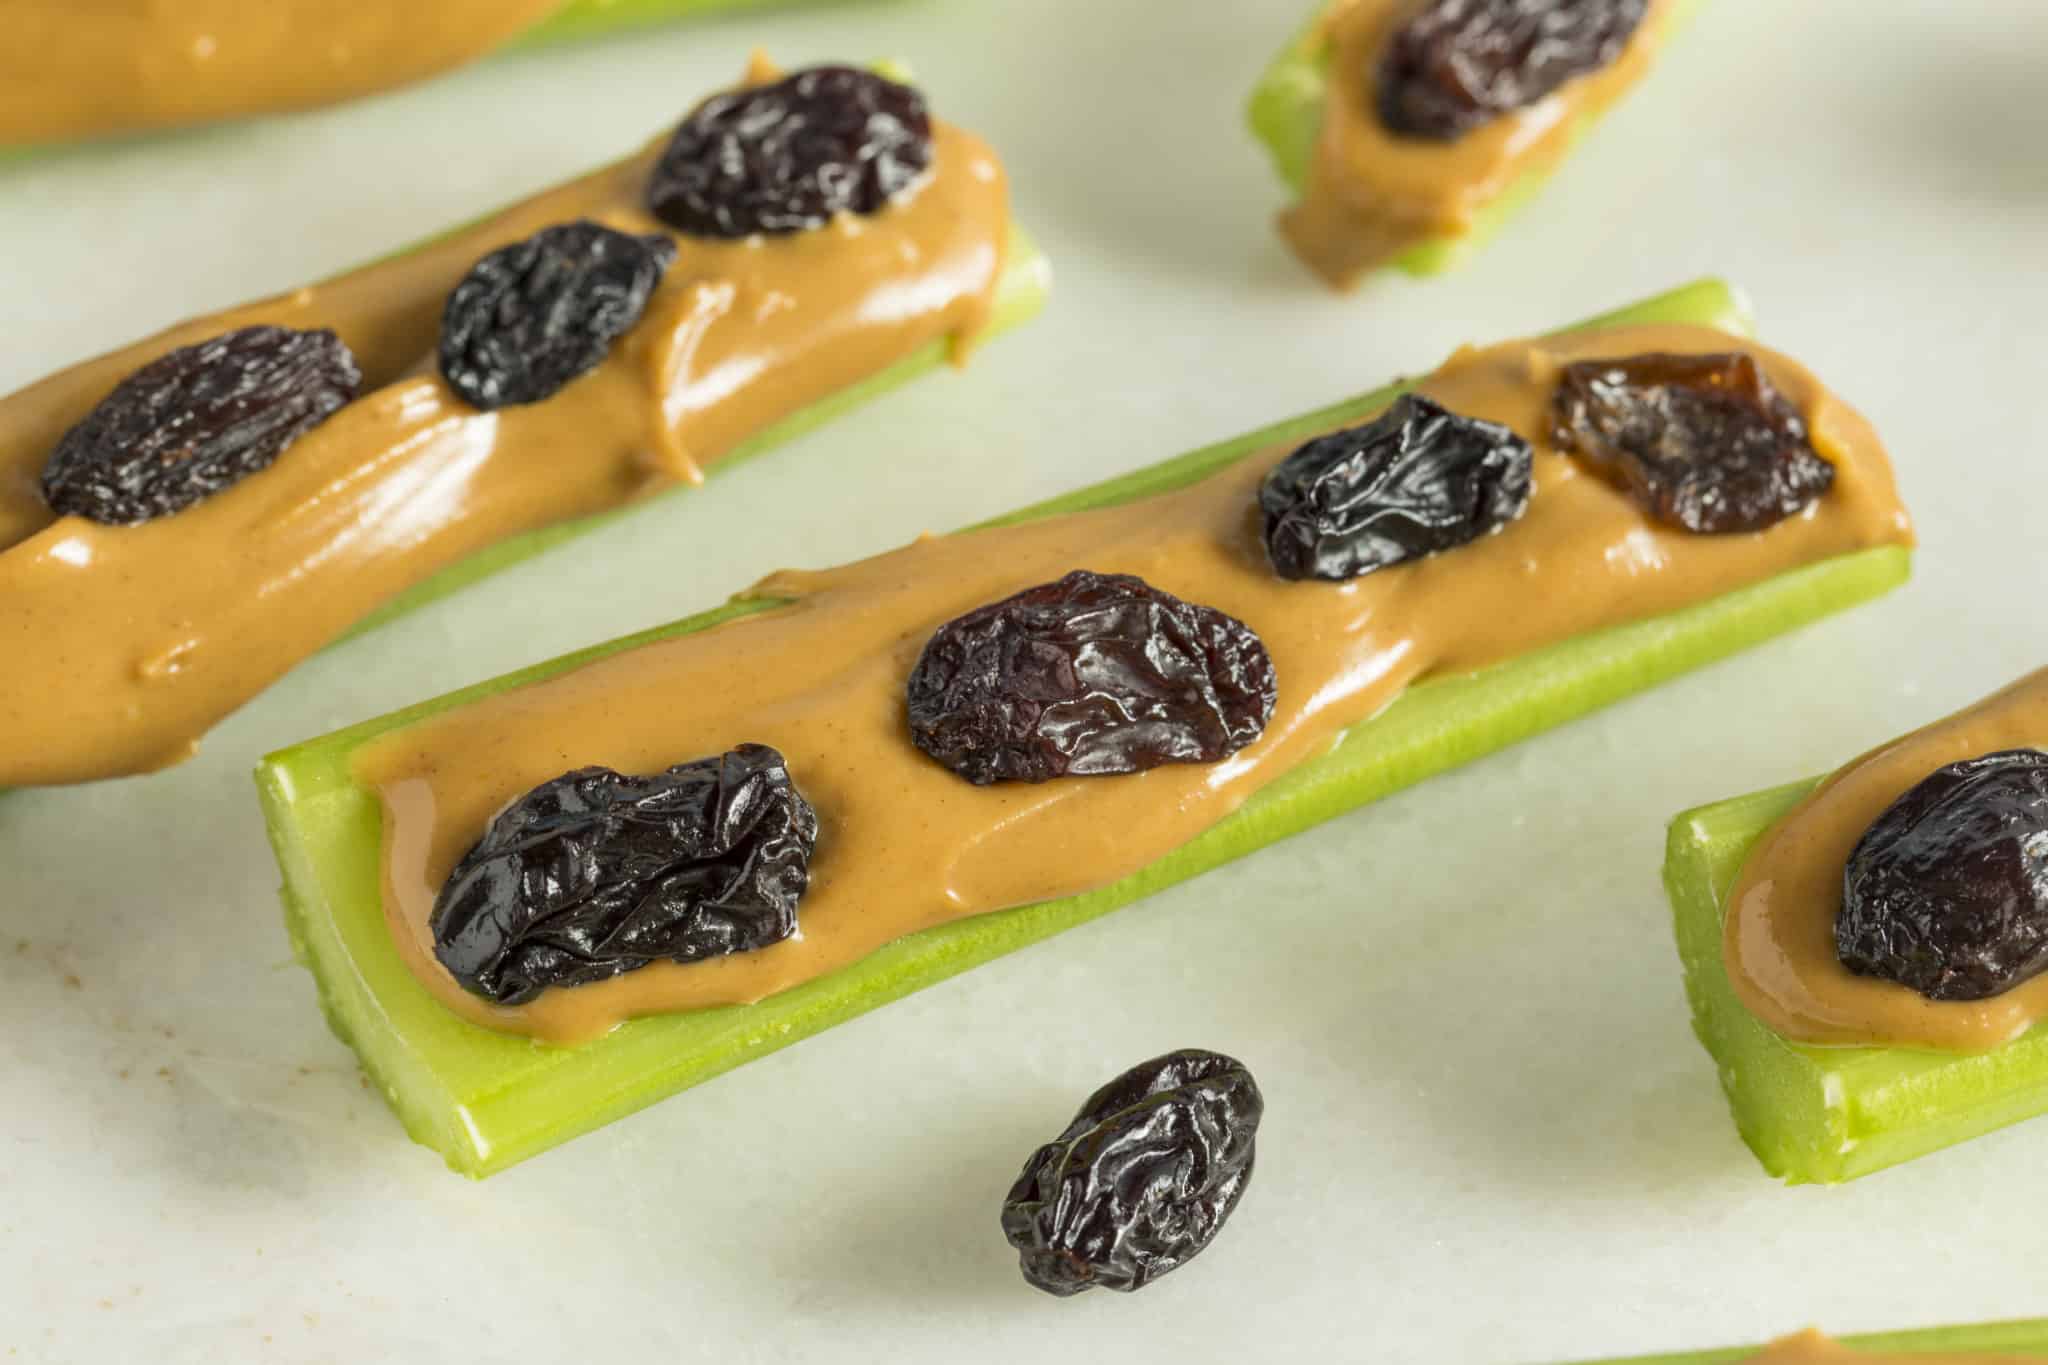 Celery sticks with peanut butter and raisins